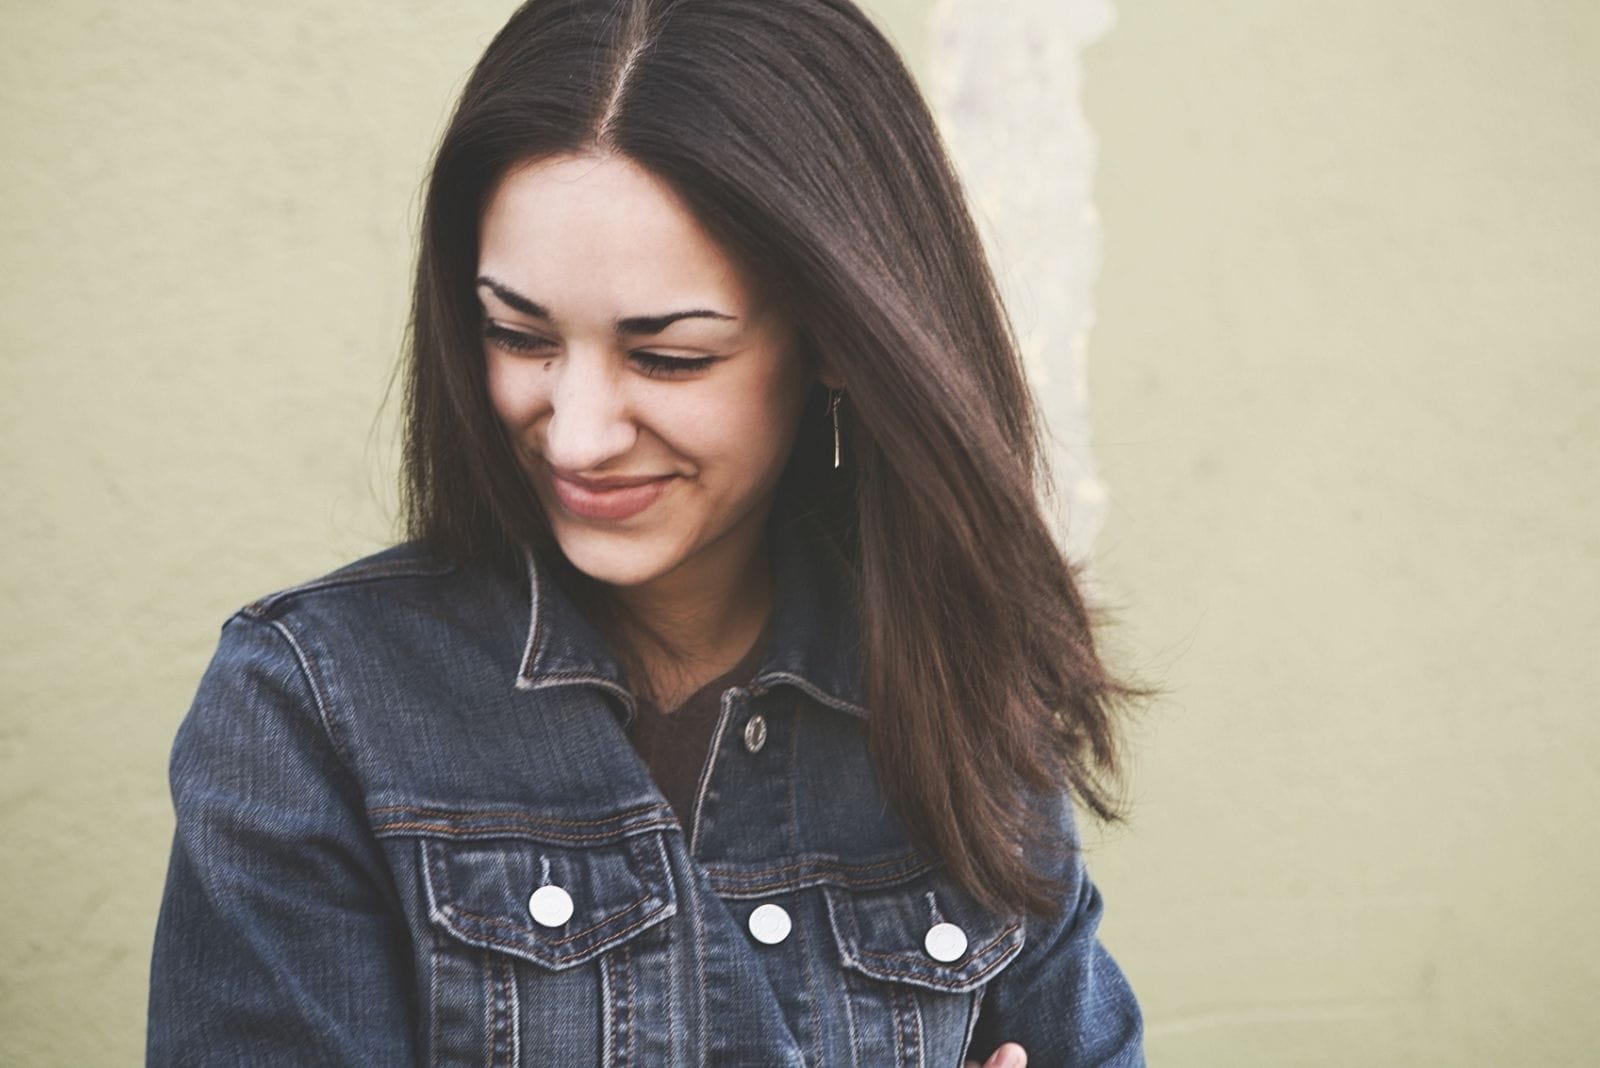 shy young woman wearing denim jacket smiling 